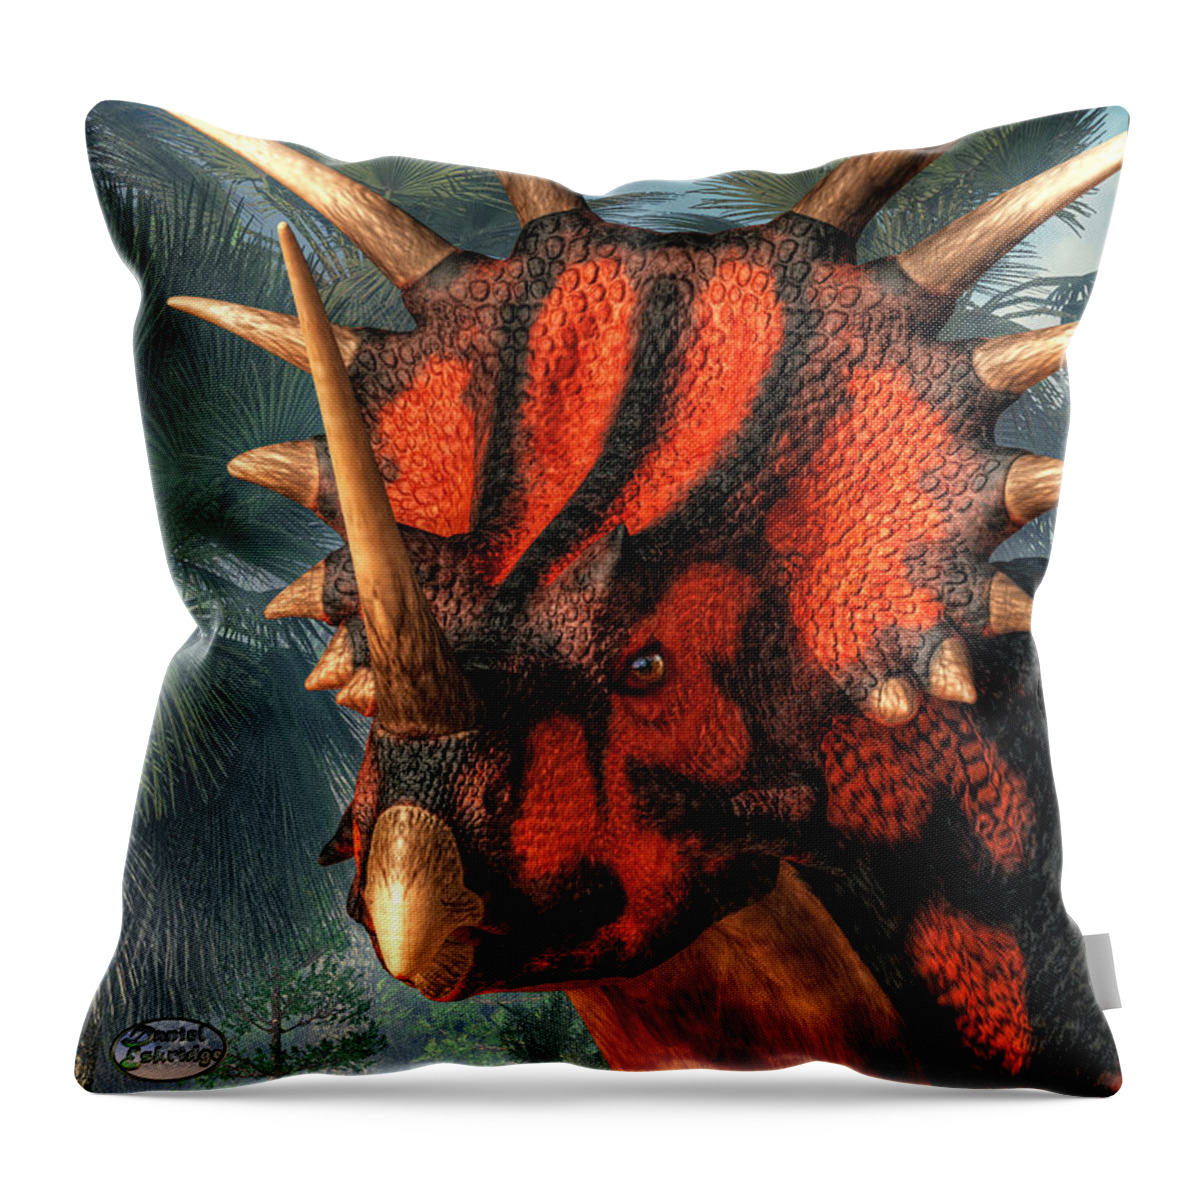 Styracosaurus Throw Pillow featuring the digital art Styracosaurus Head by Daniel Eskridge